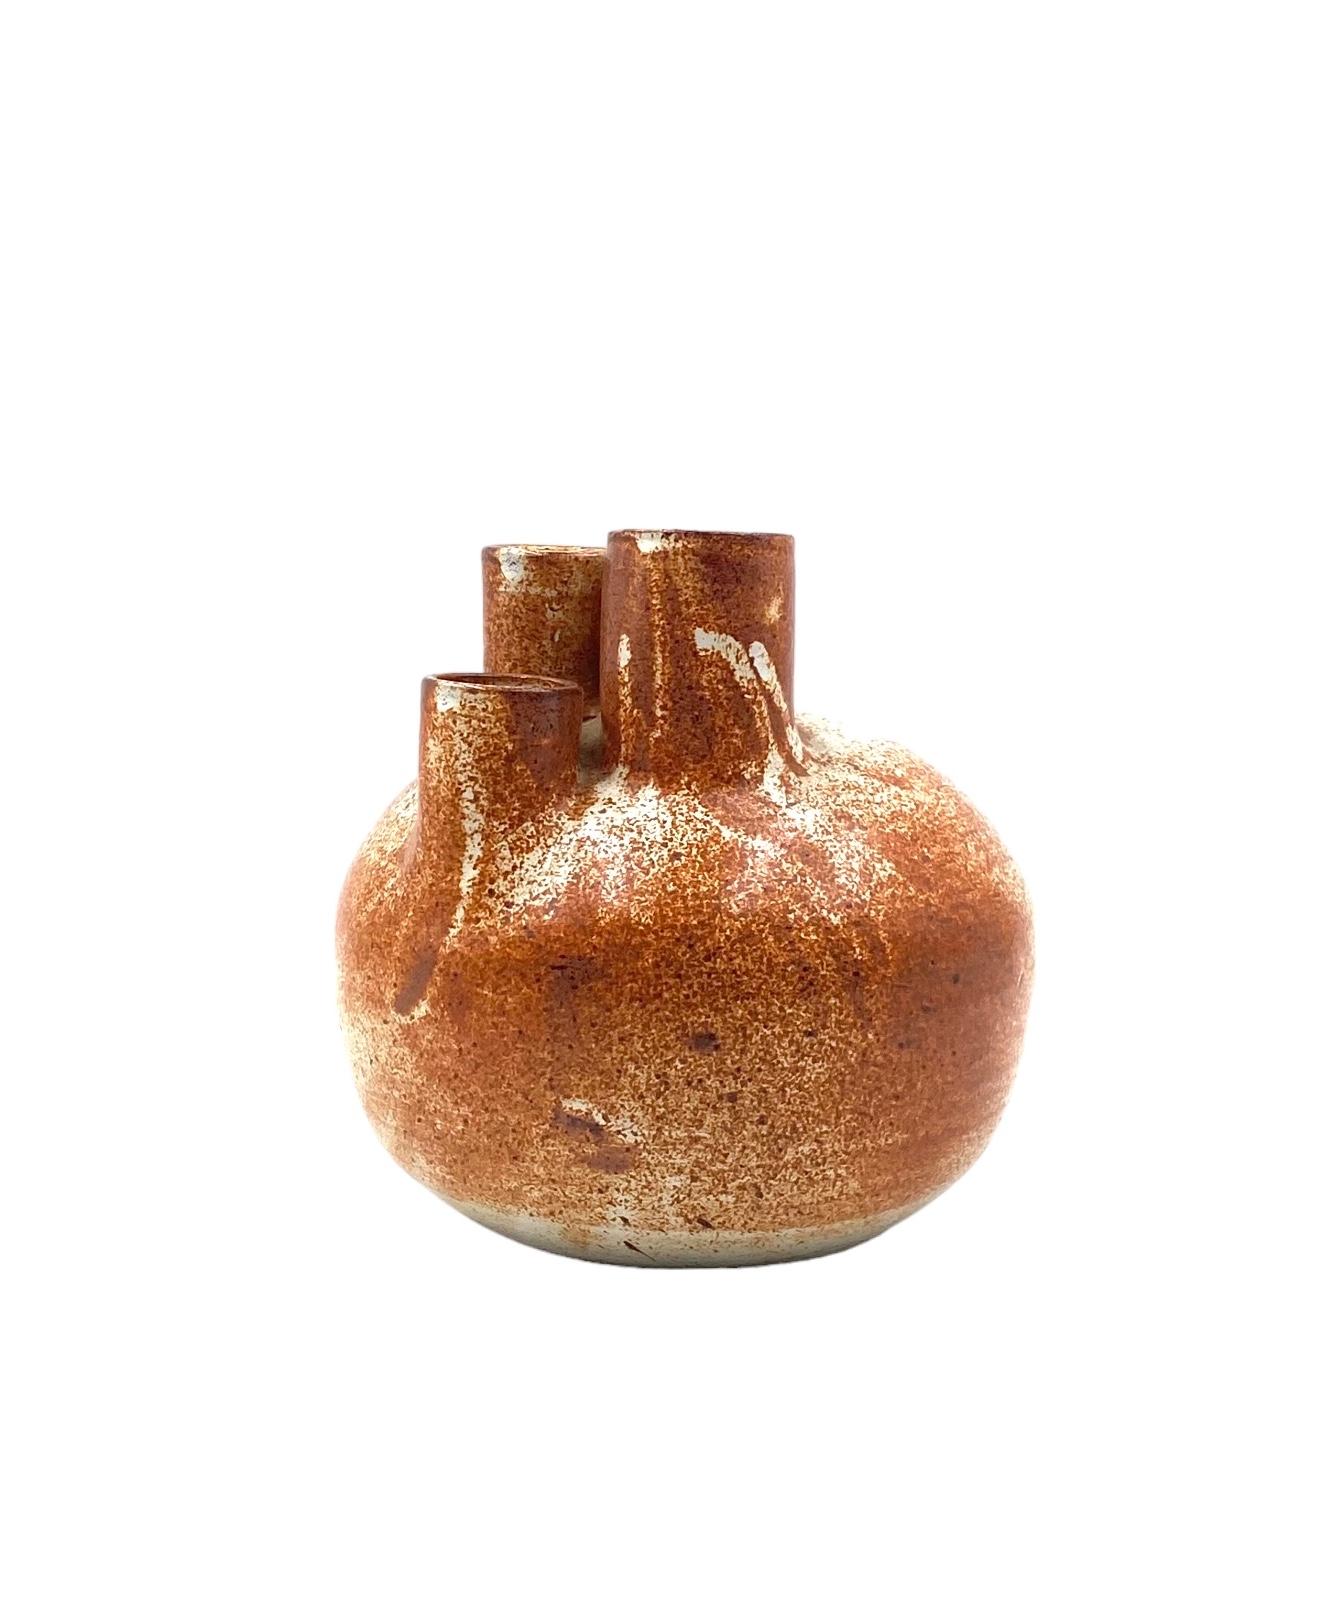 Organic modern brown earthenware vase, France 1970s For Sale 6